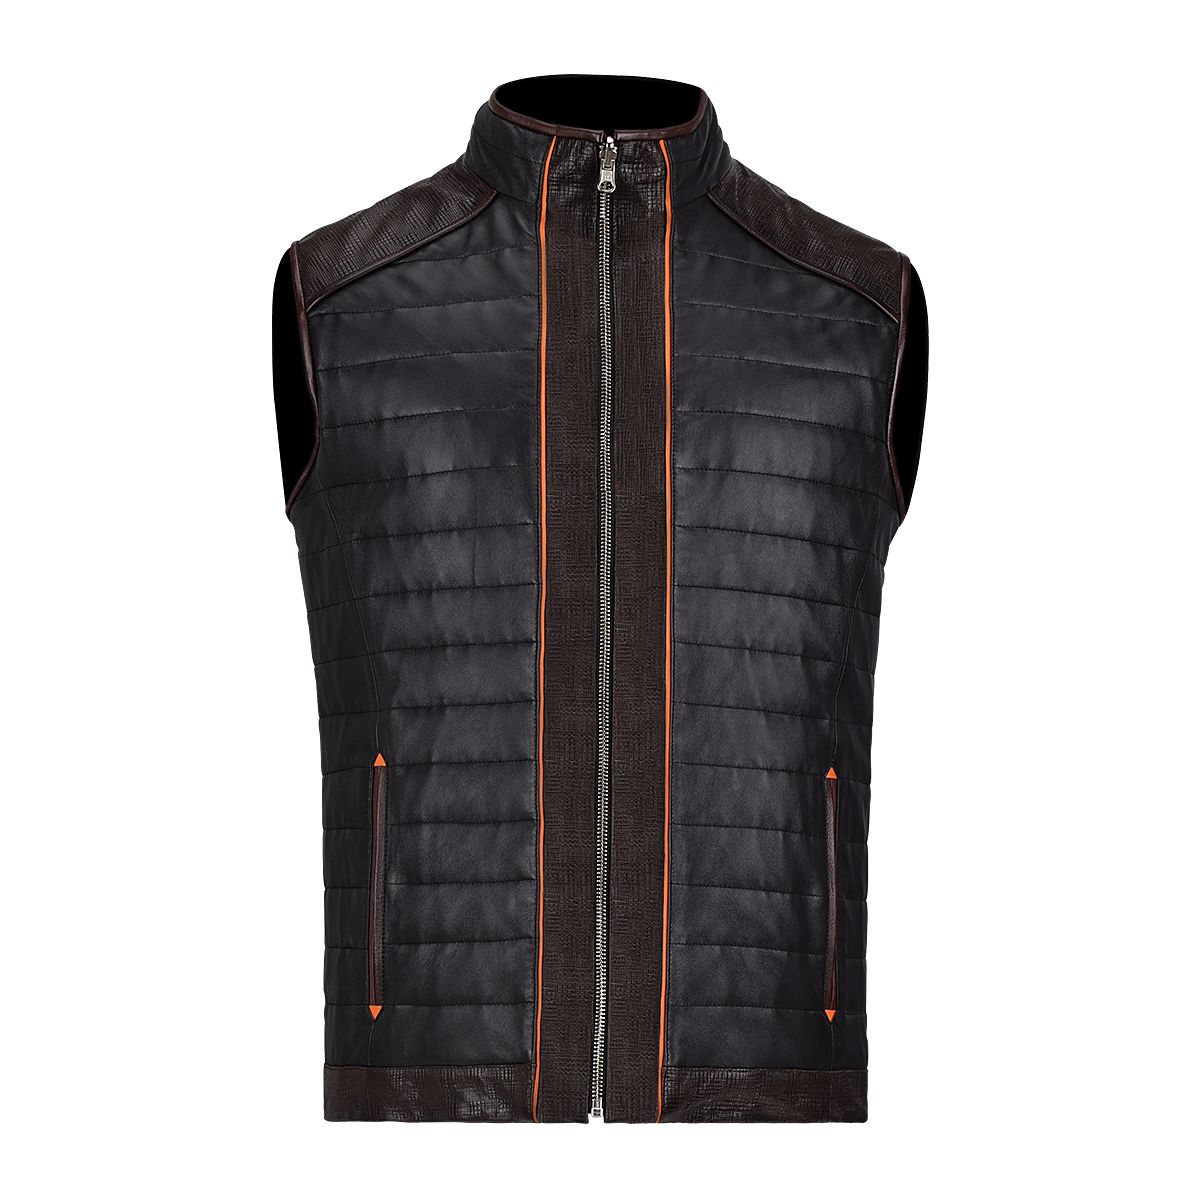 H294BOC - Cuadra black casual fashion racer sheepskin leather vest for men-Kuet.us - Cuadra Boots - Western Cowboy, Casual Fashion and Dress Boots